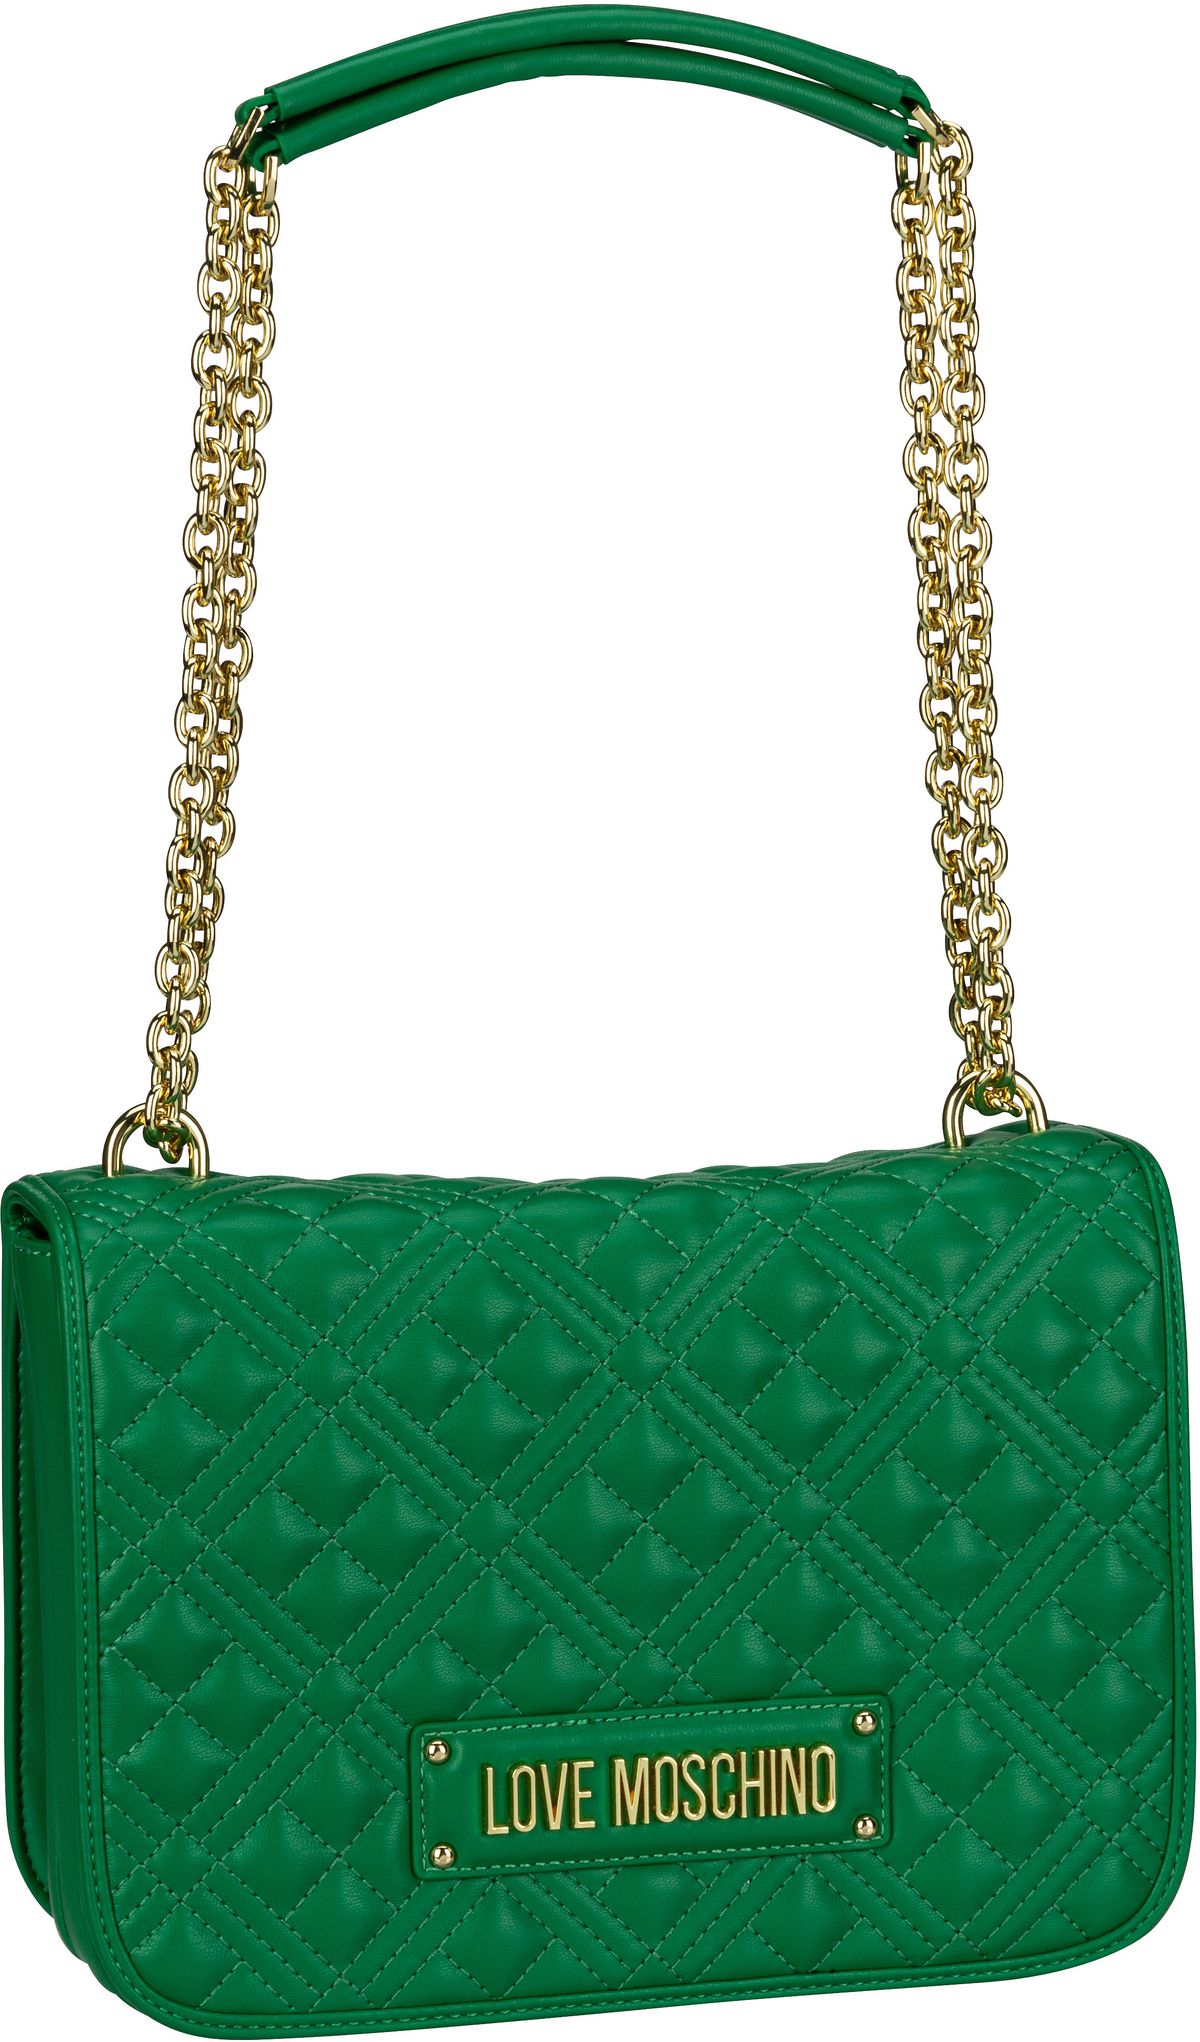 Love Moschino  Quilted Bag 4000 - Abendtasche - Grün (Green)